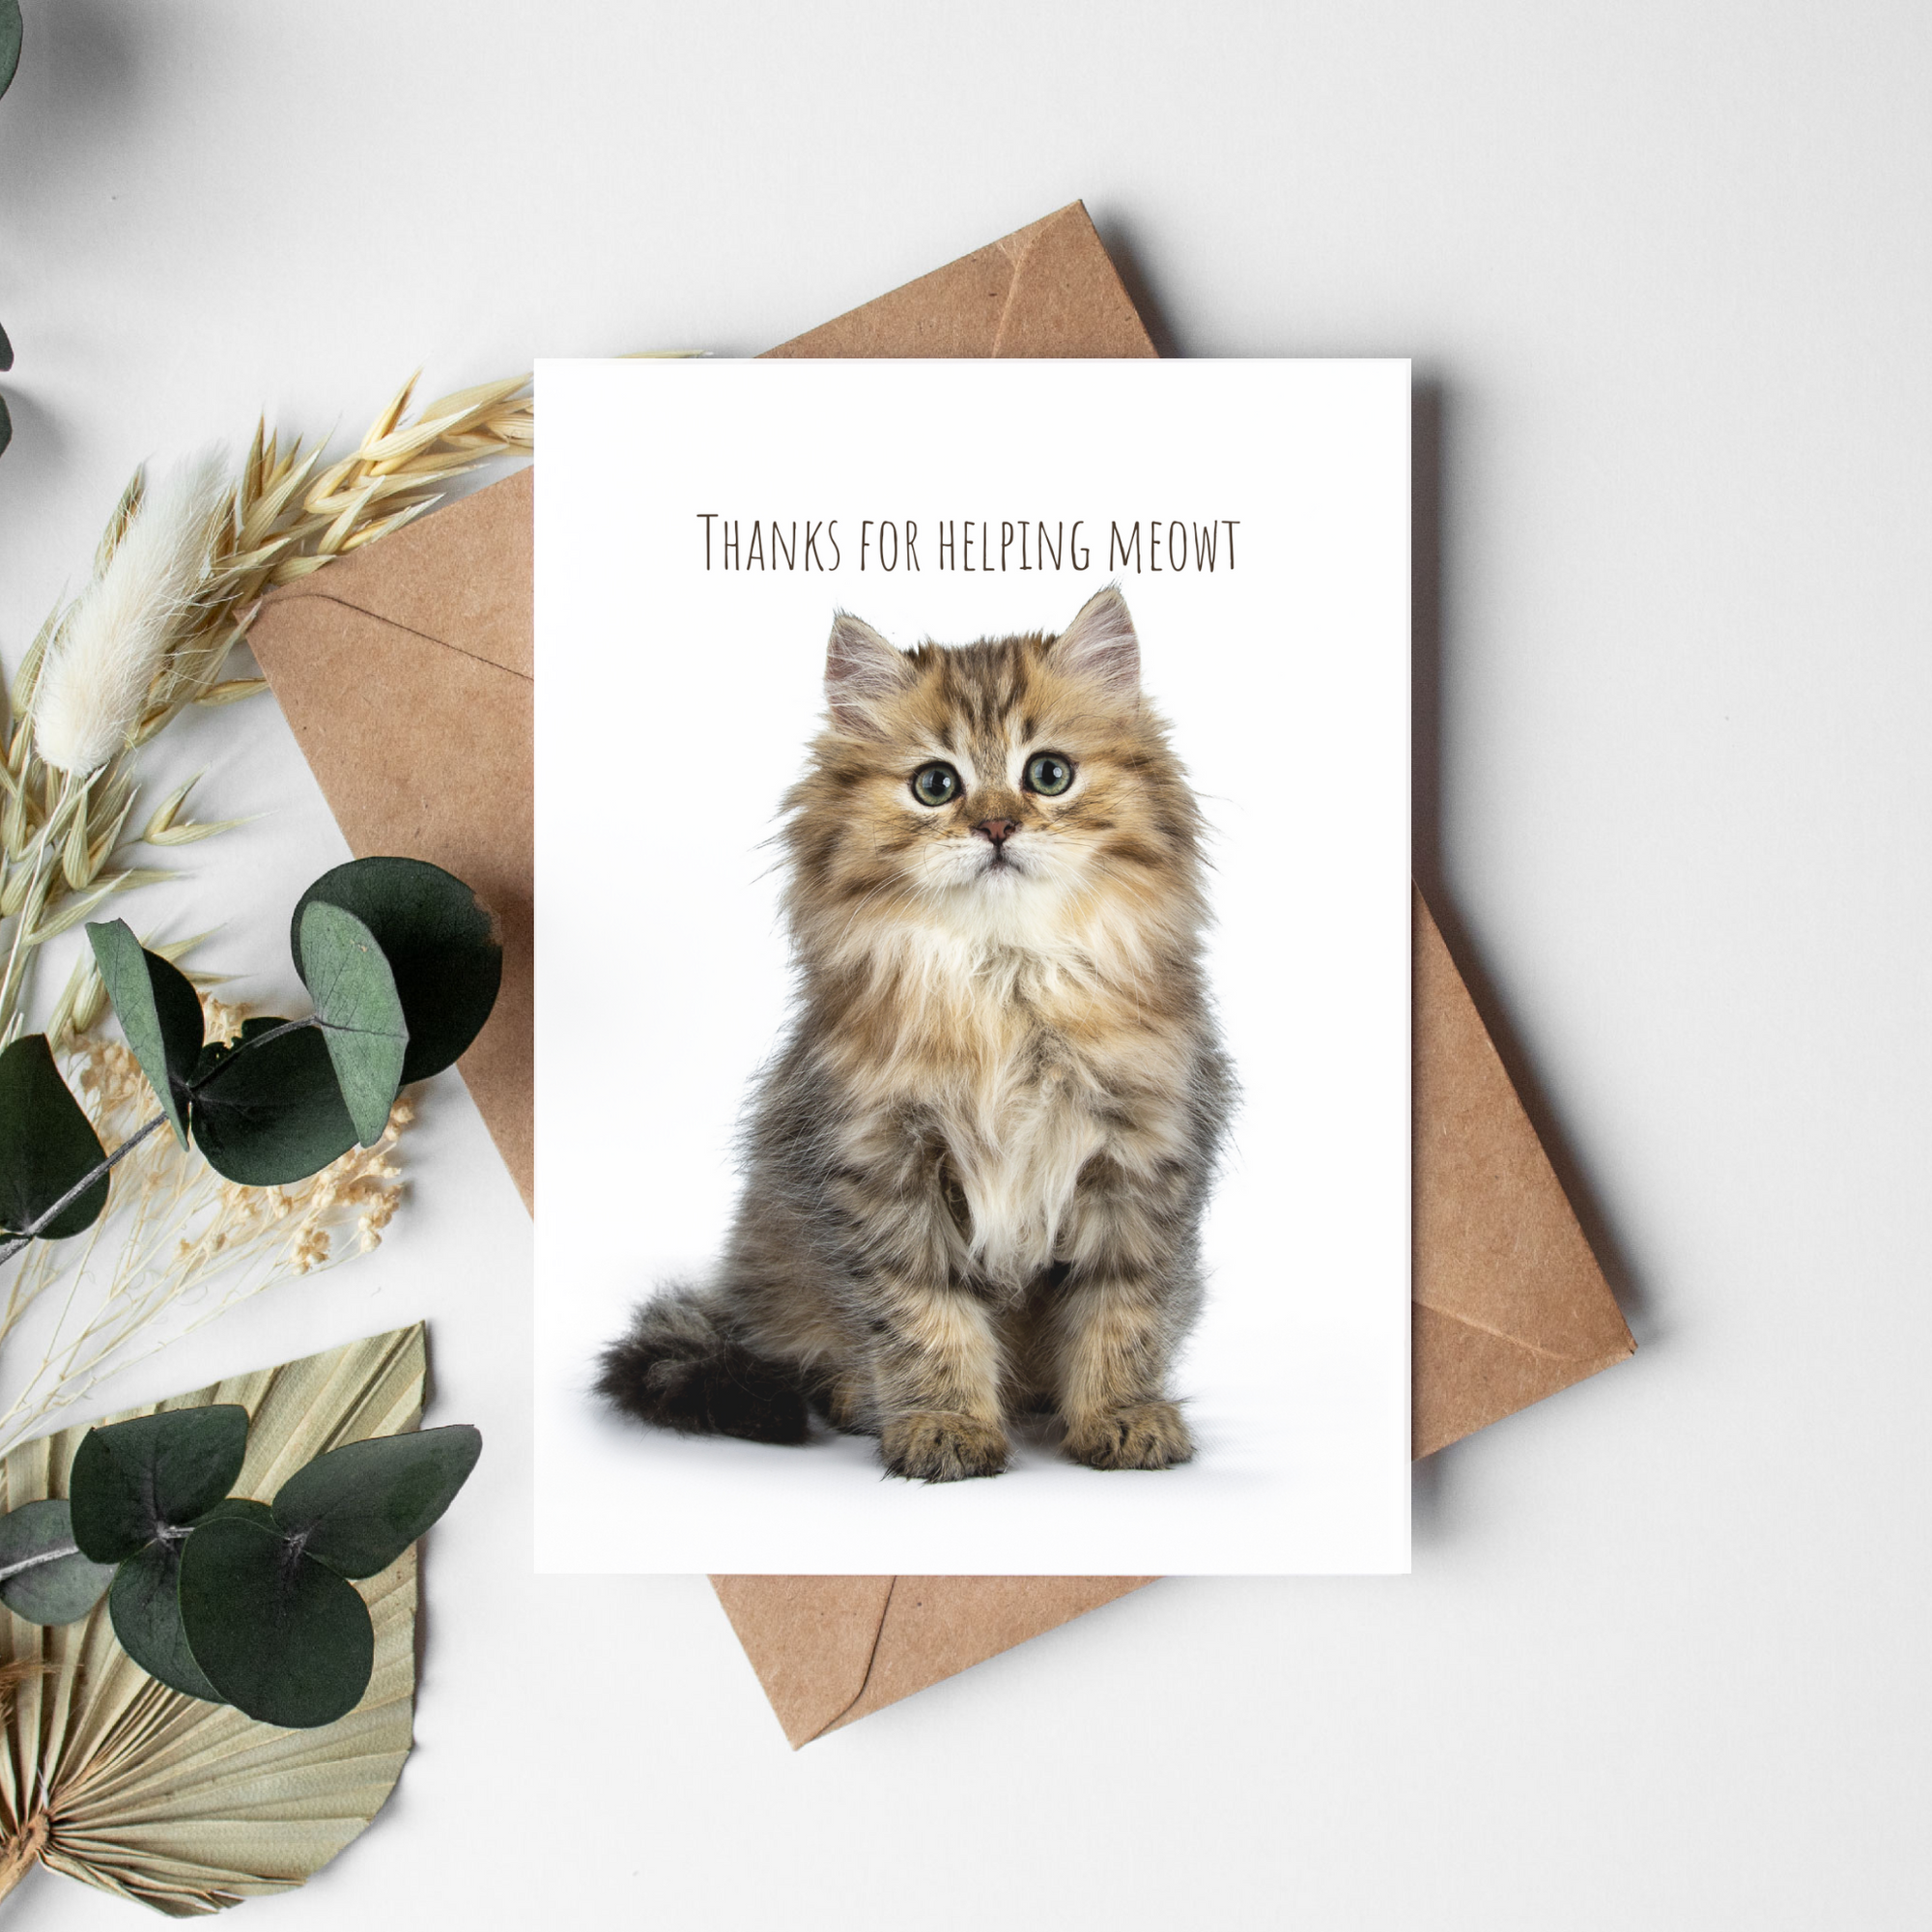 Helping Meowt Cat Greeting Card